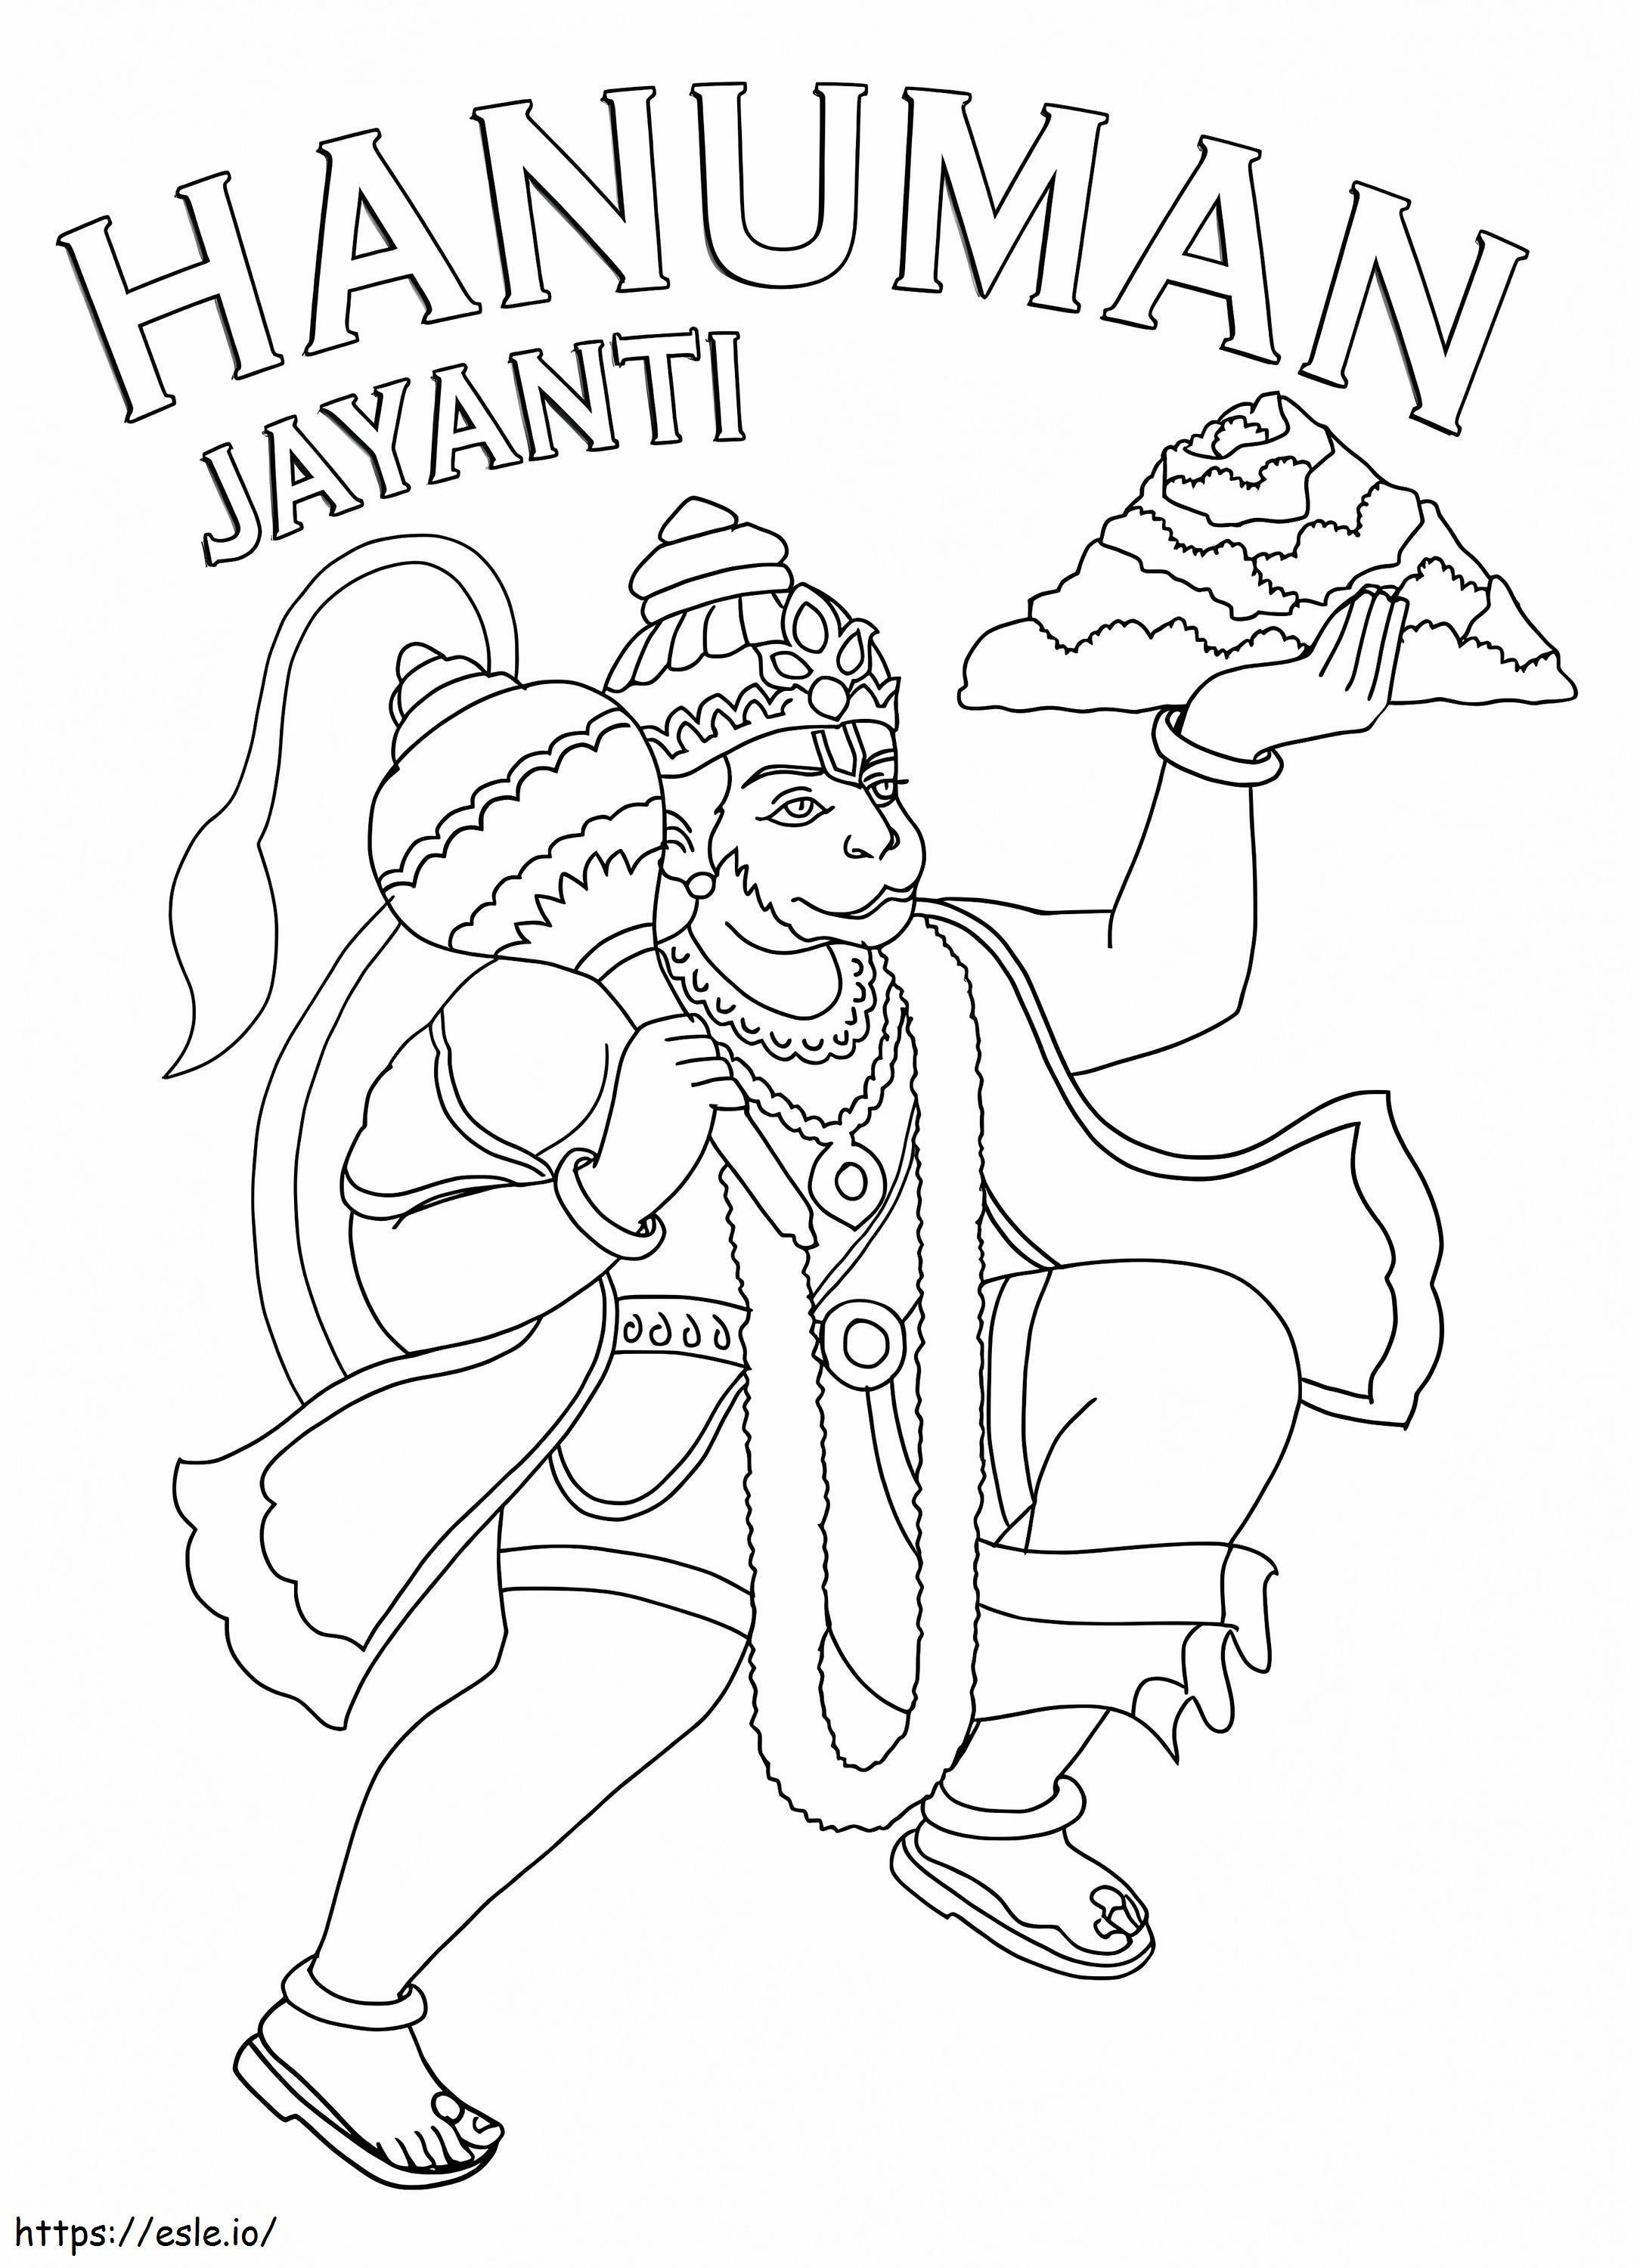 Hanuman Jayanti 8 boyama